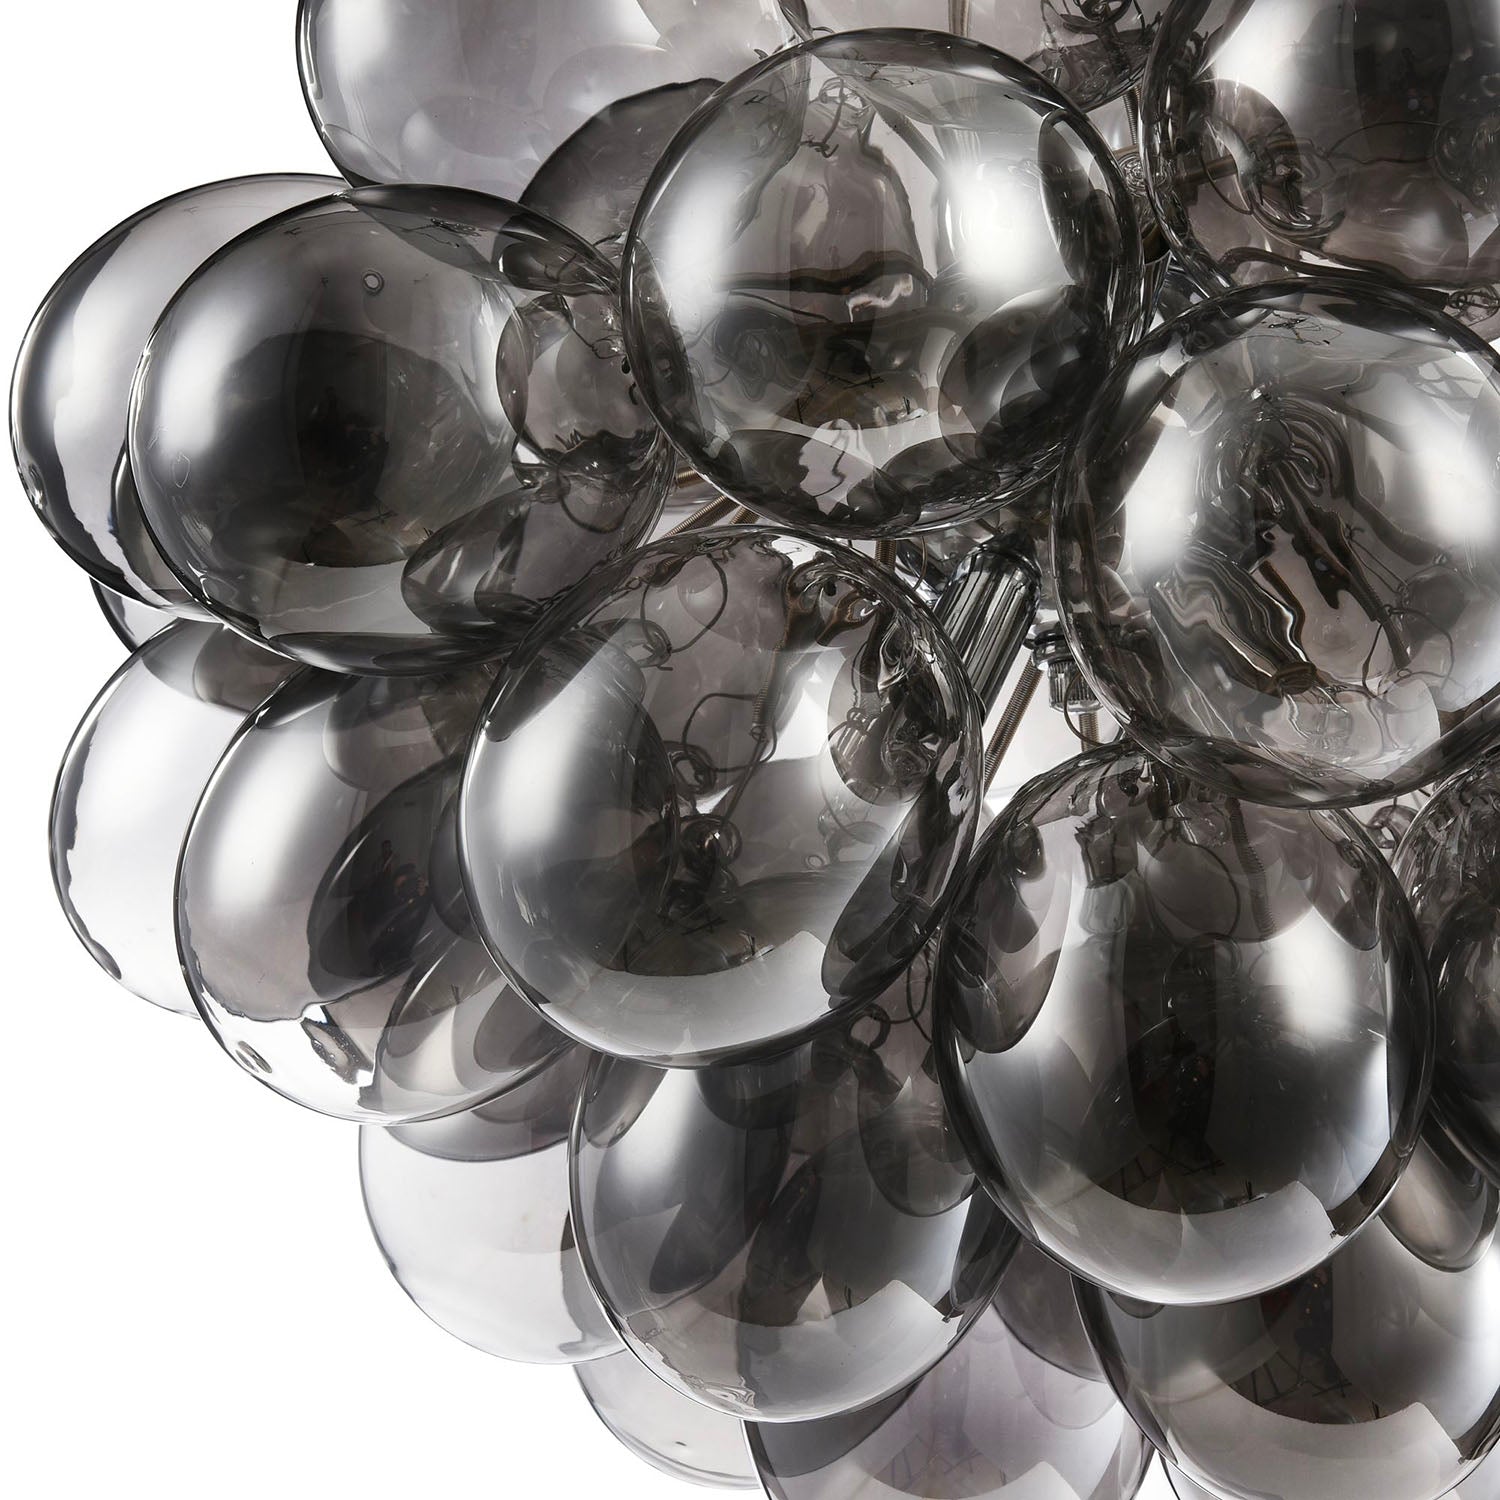 BALBO - Cluster chandelier of glass globes for dining room